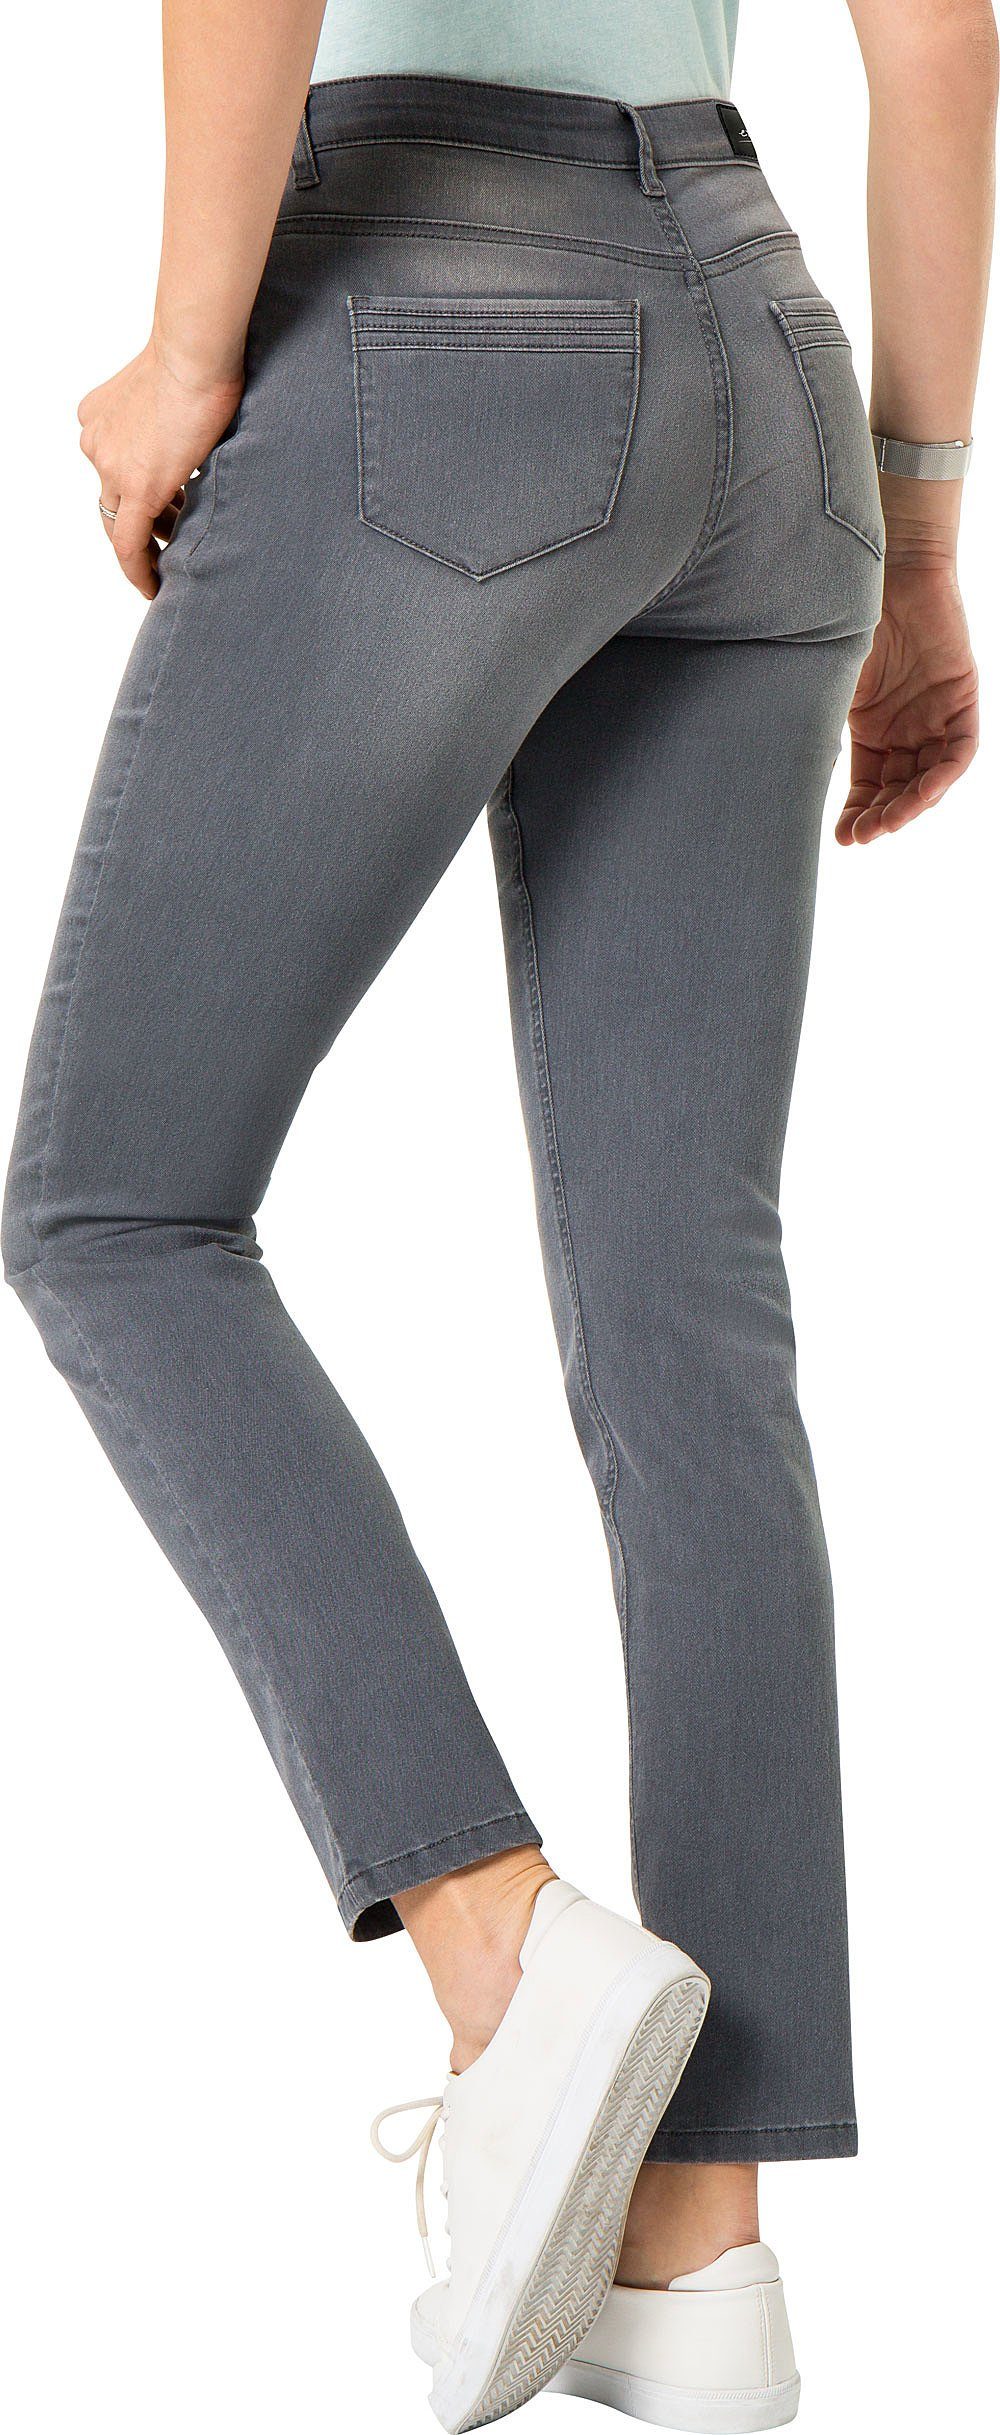 Emilia Parker ultrabequeme Jeans mit Stretch-Hose knackigem Sitz grau